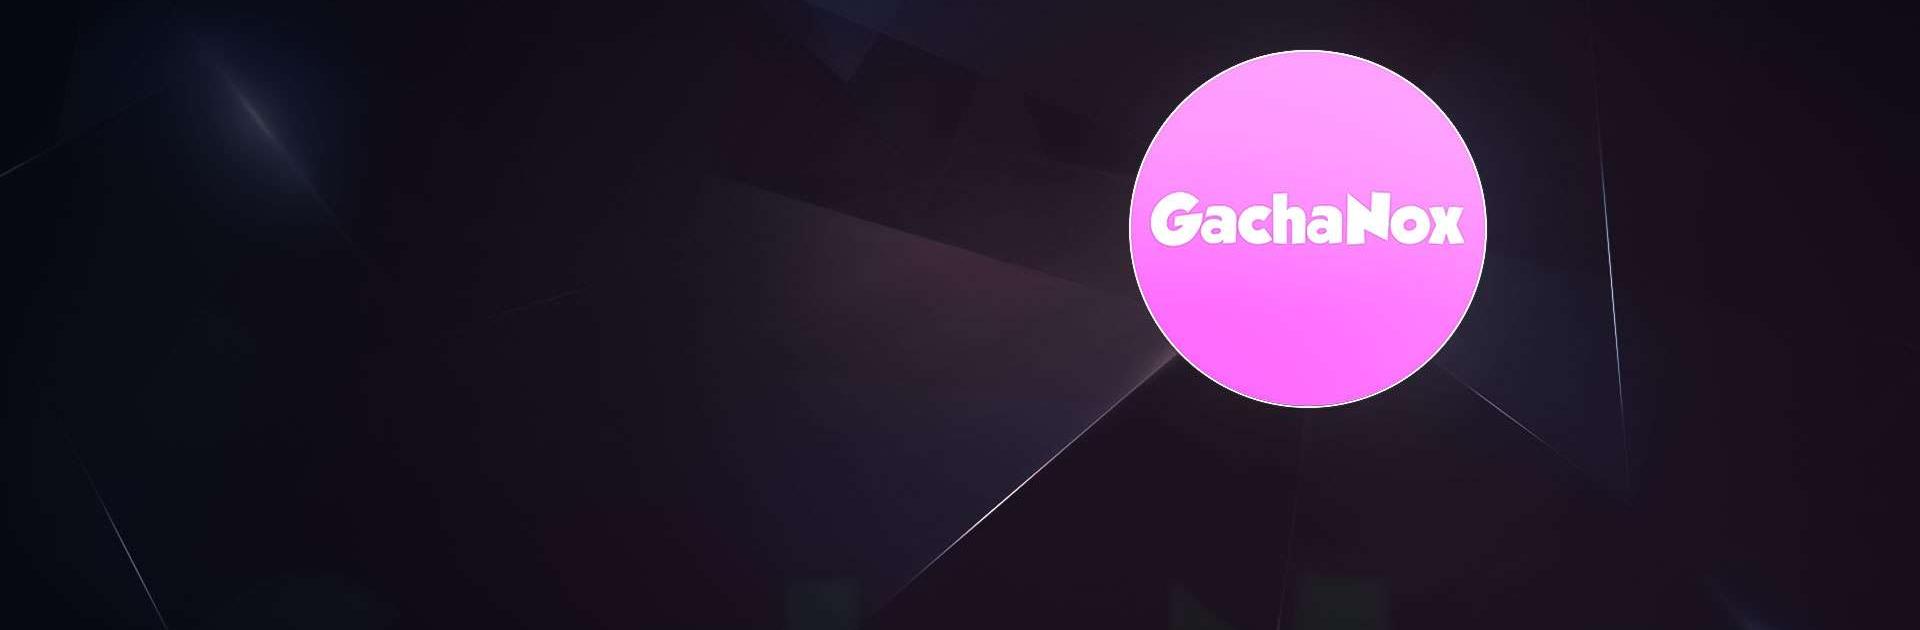 Gacha Nox Apk APK (Android App) - Baixar Grátis